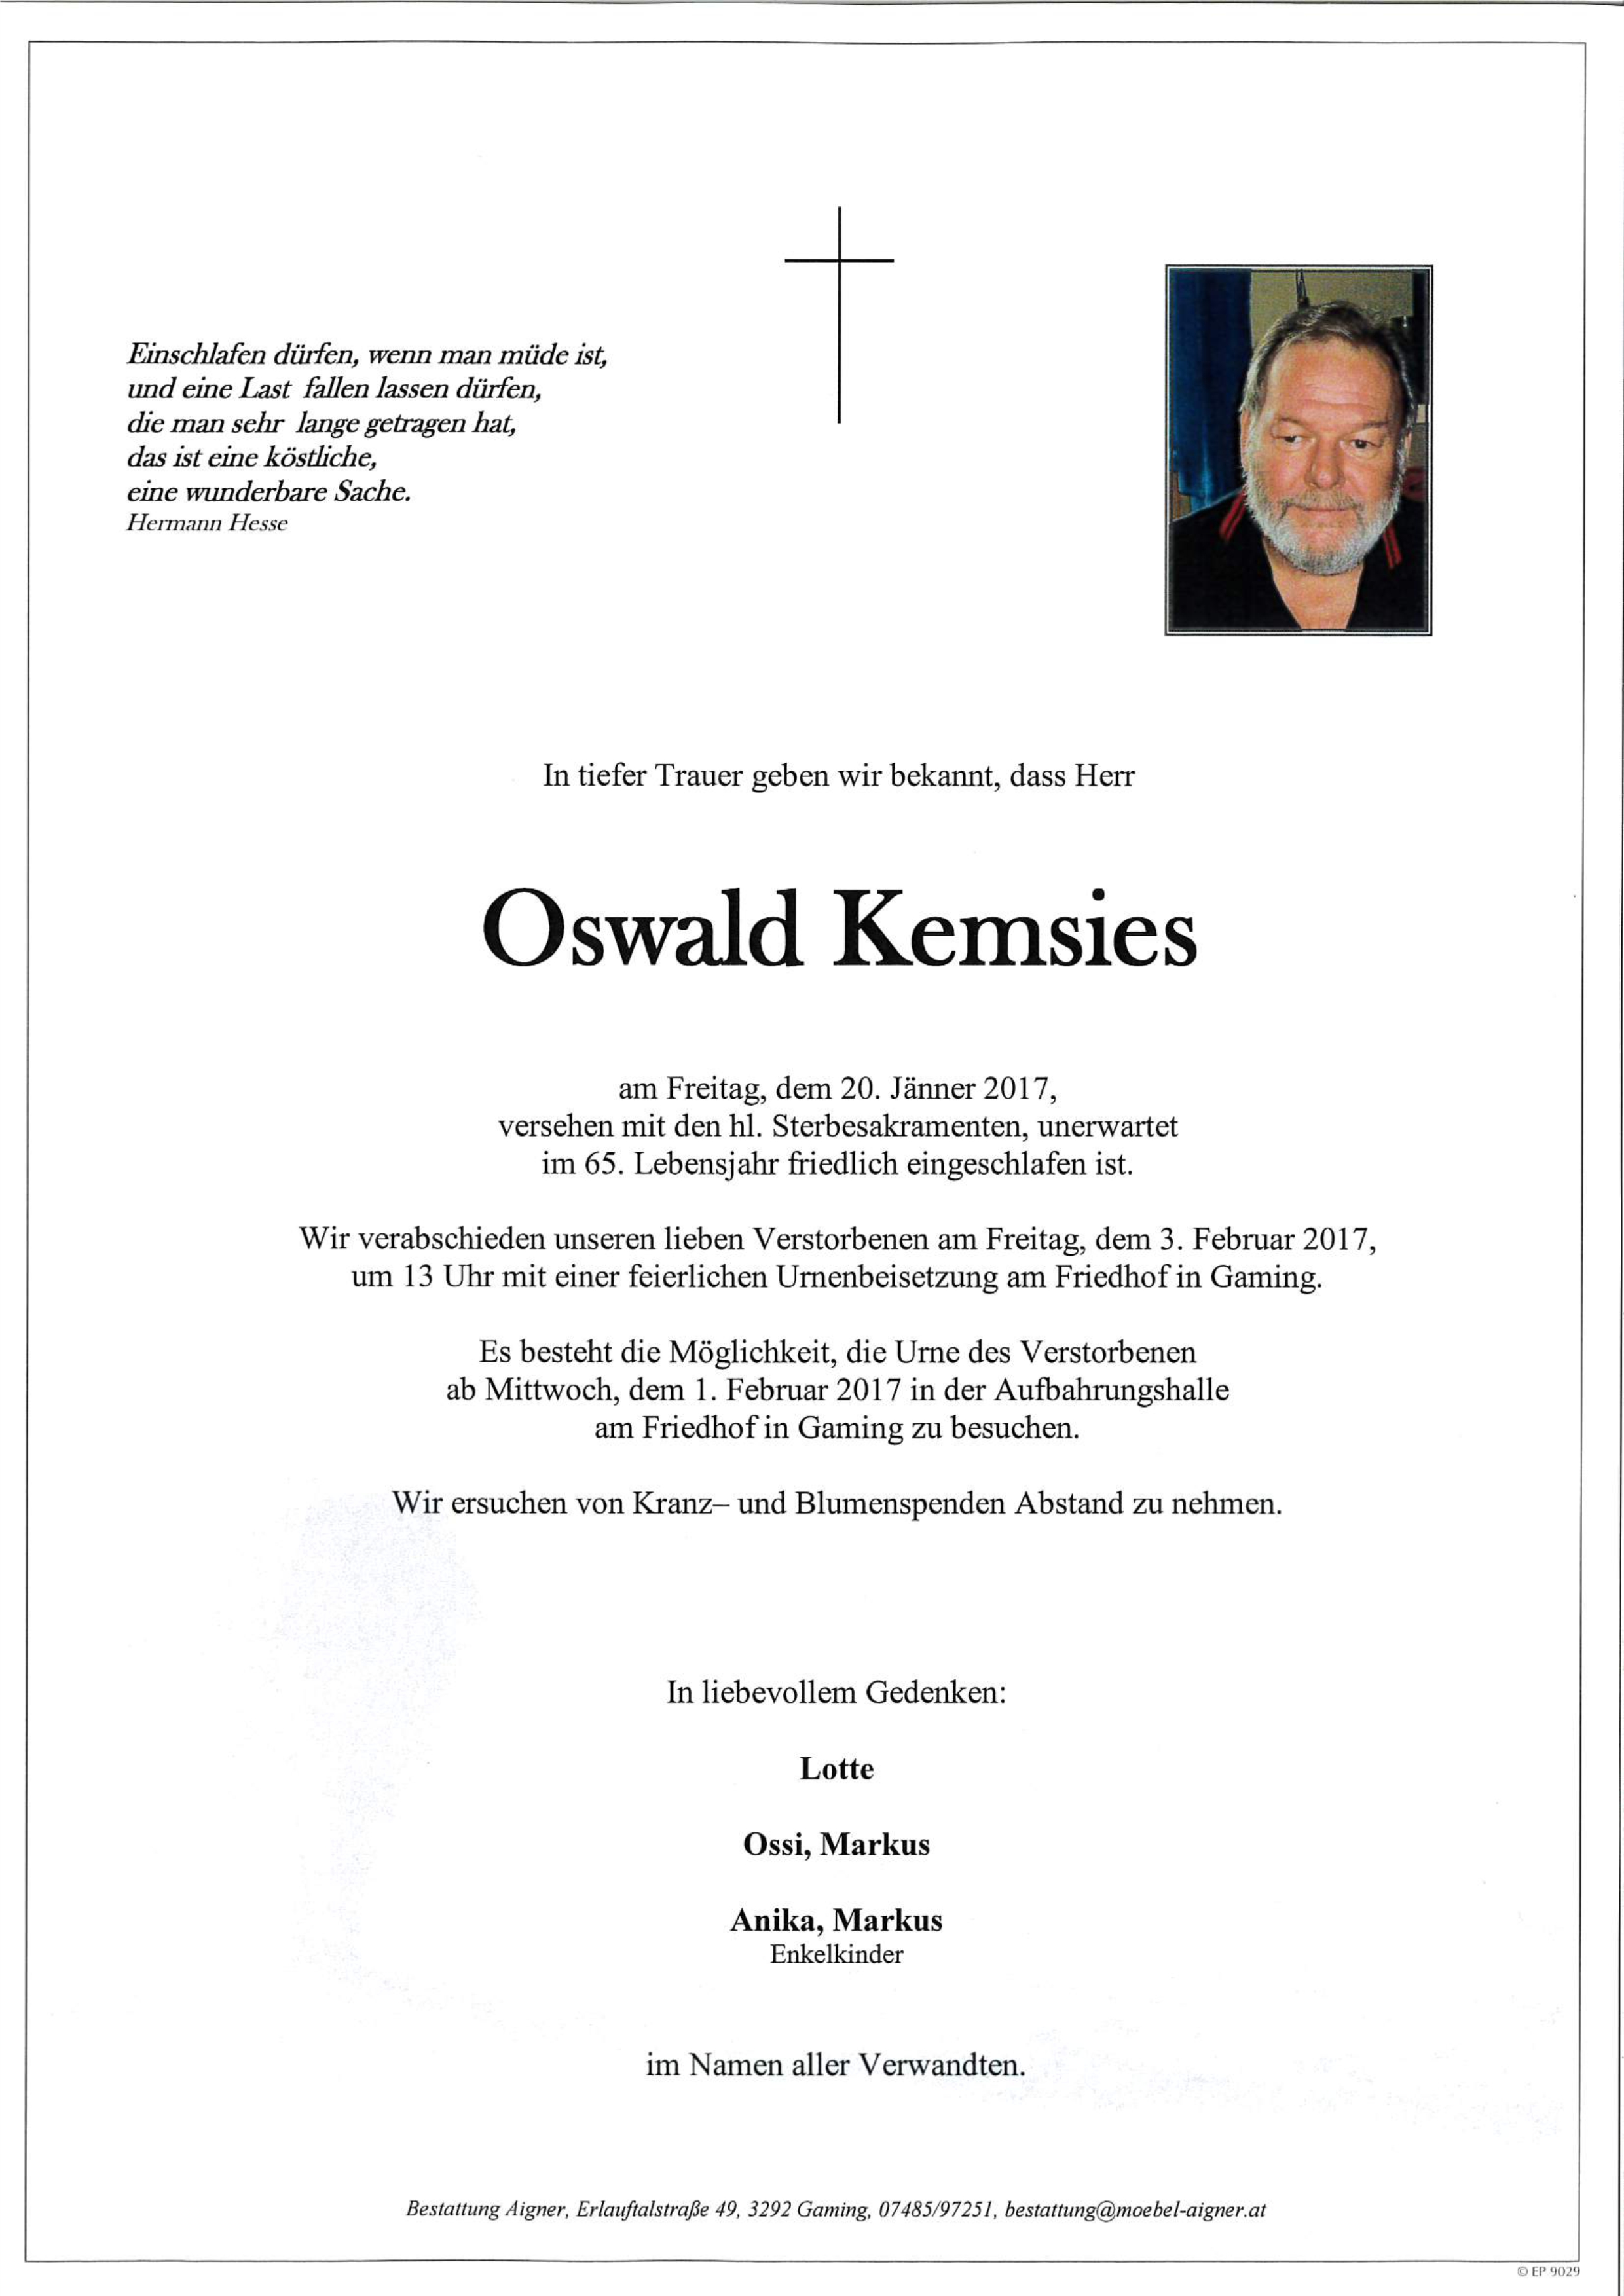 Oswald Kemsies